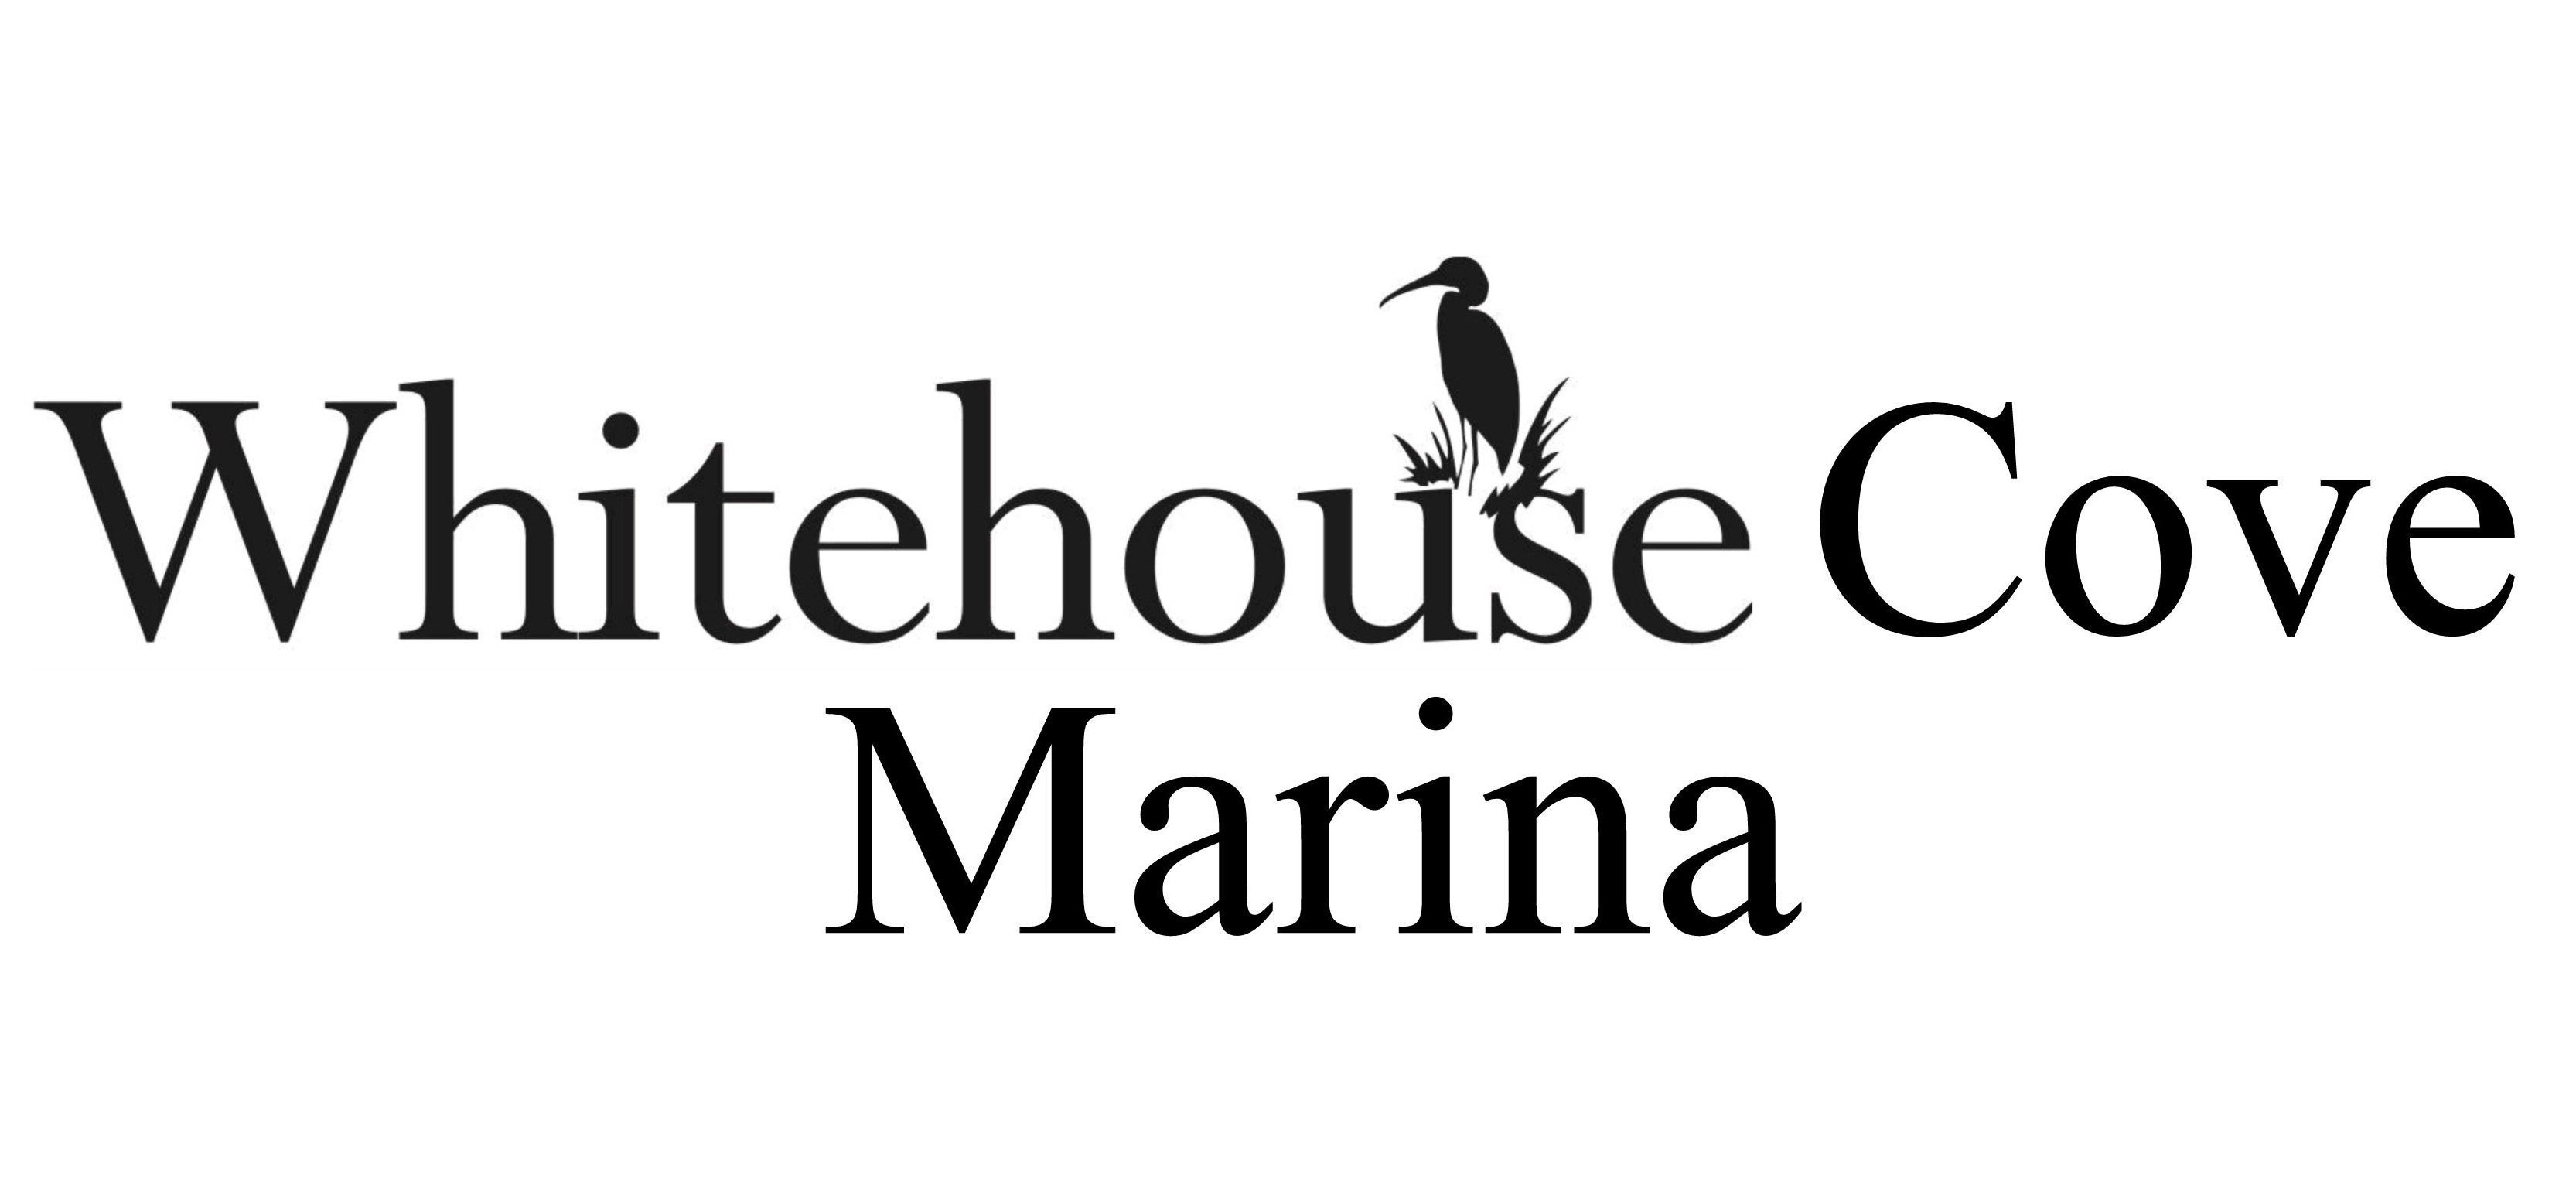 Whitehouse Cove Marina